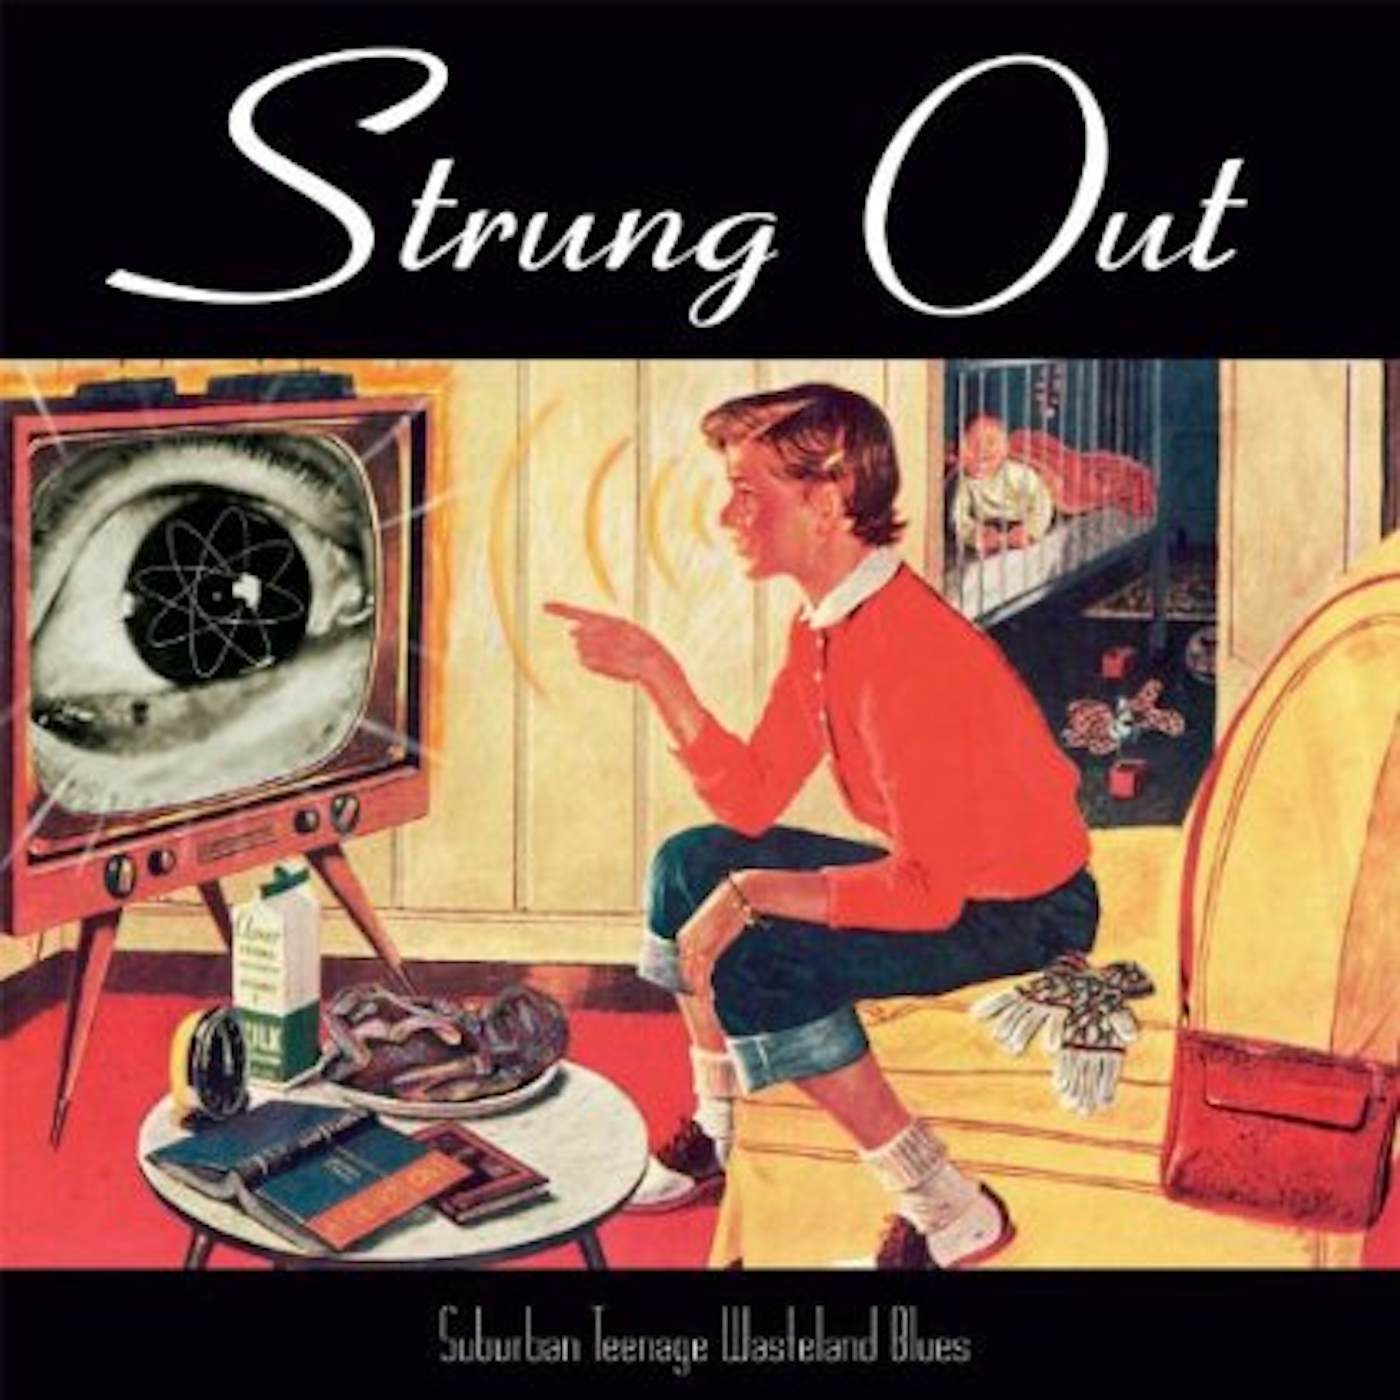 Strung Out SUBURBAN TEENAGE WASTELAND BLUES Vinyl Record